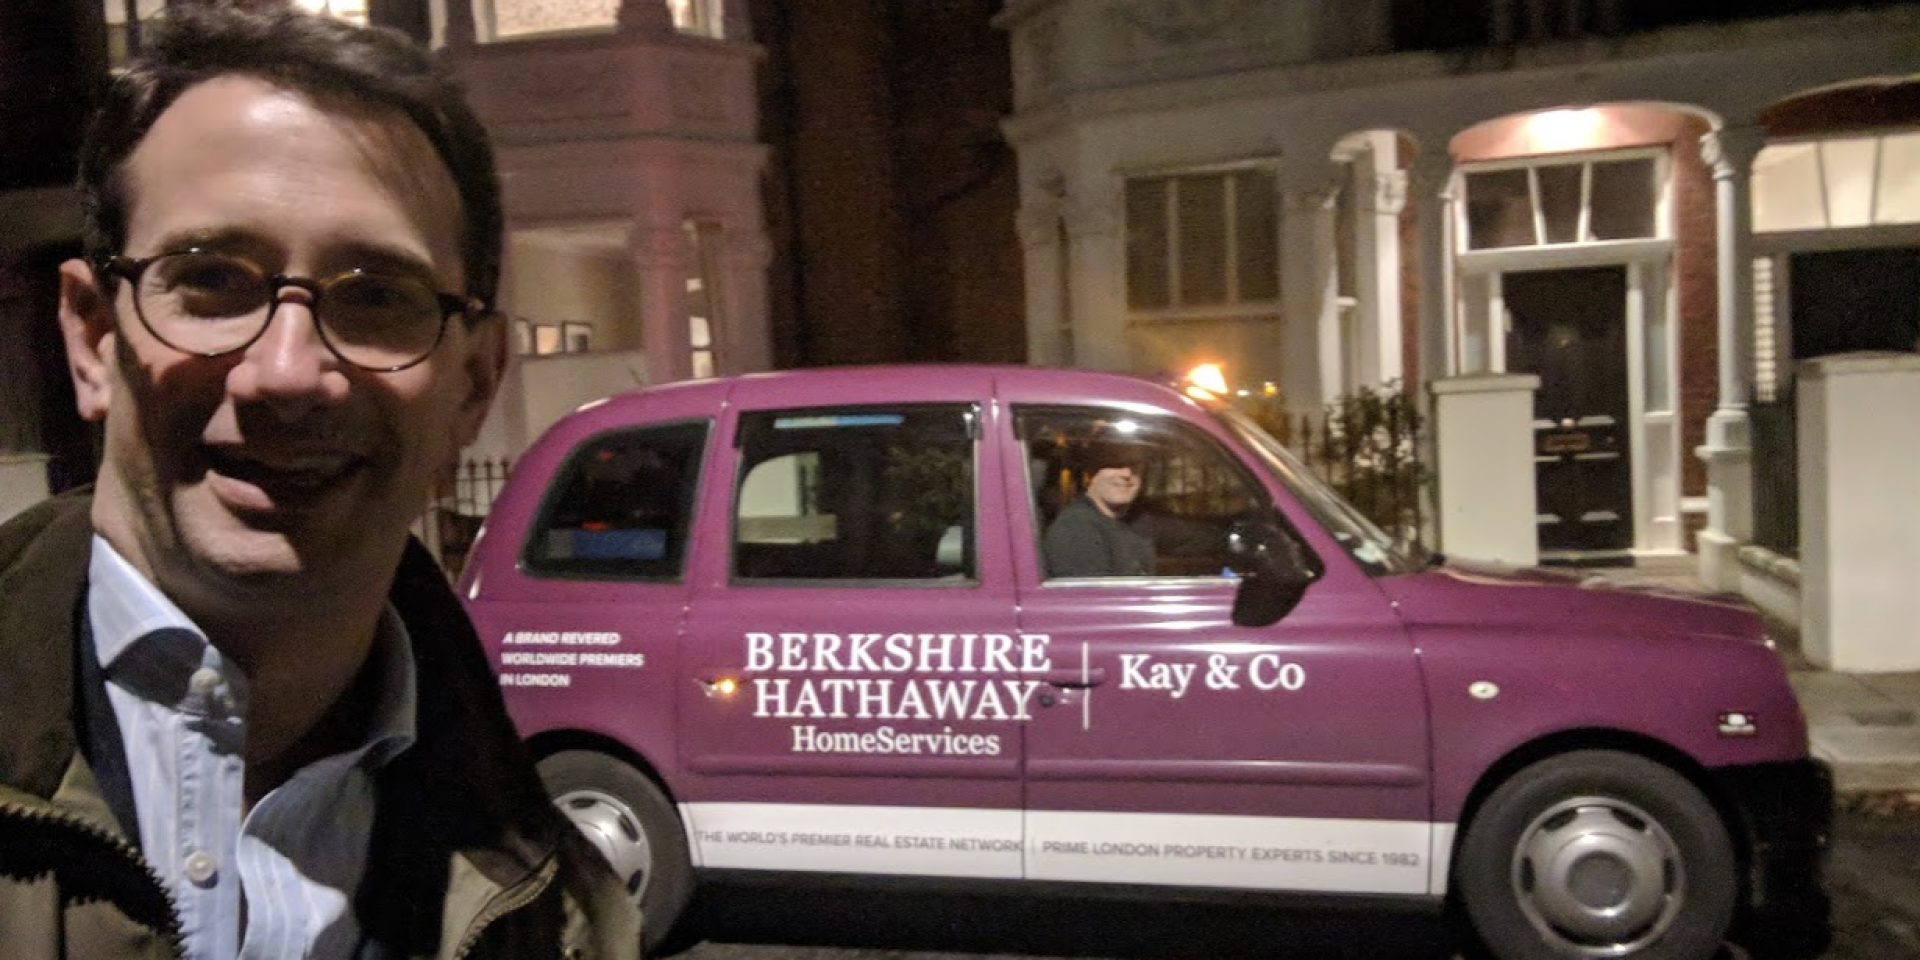 Berkshire Hathway Cab